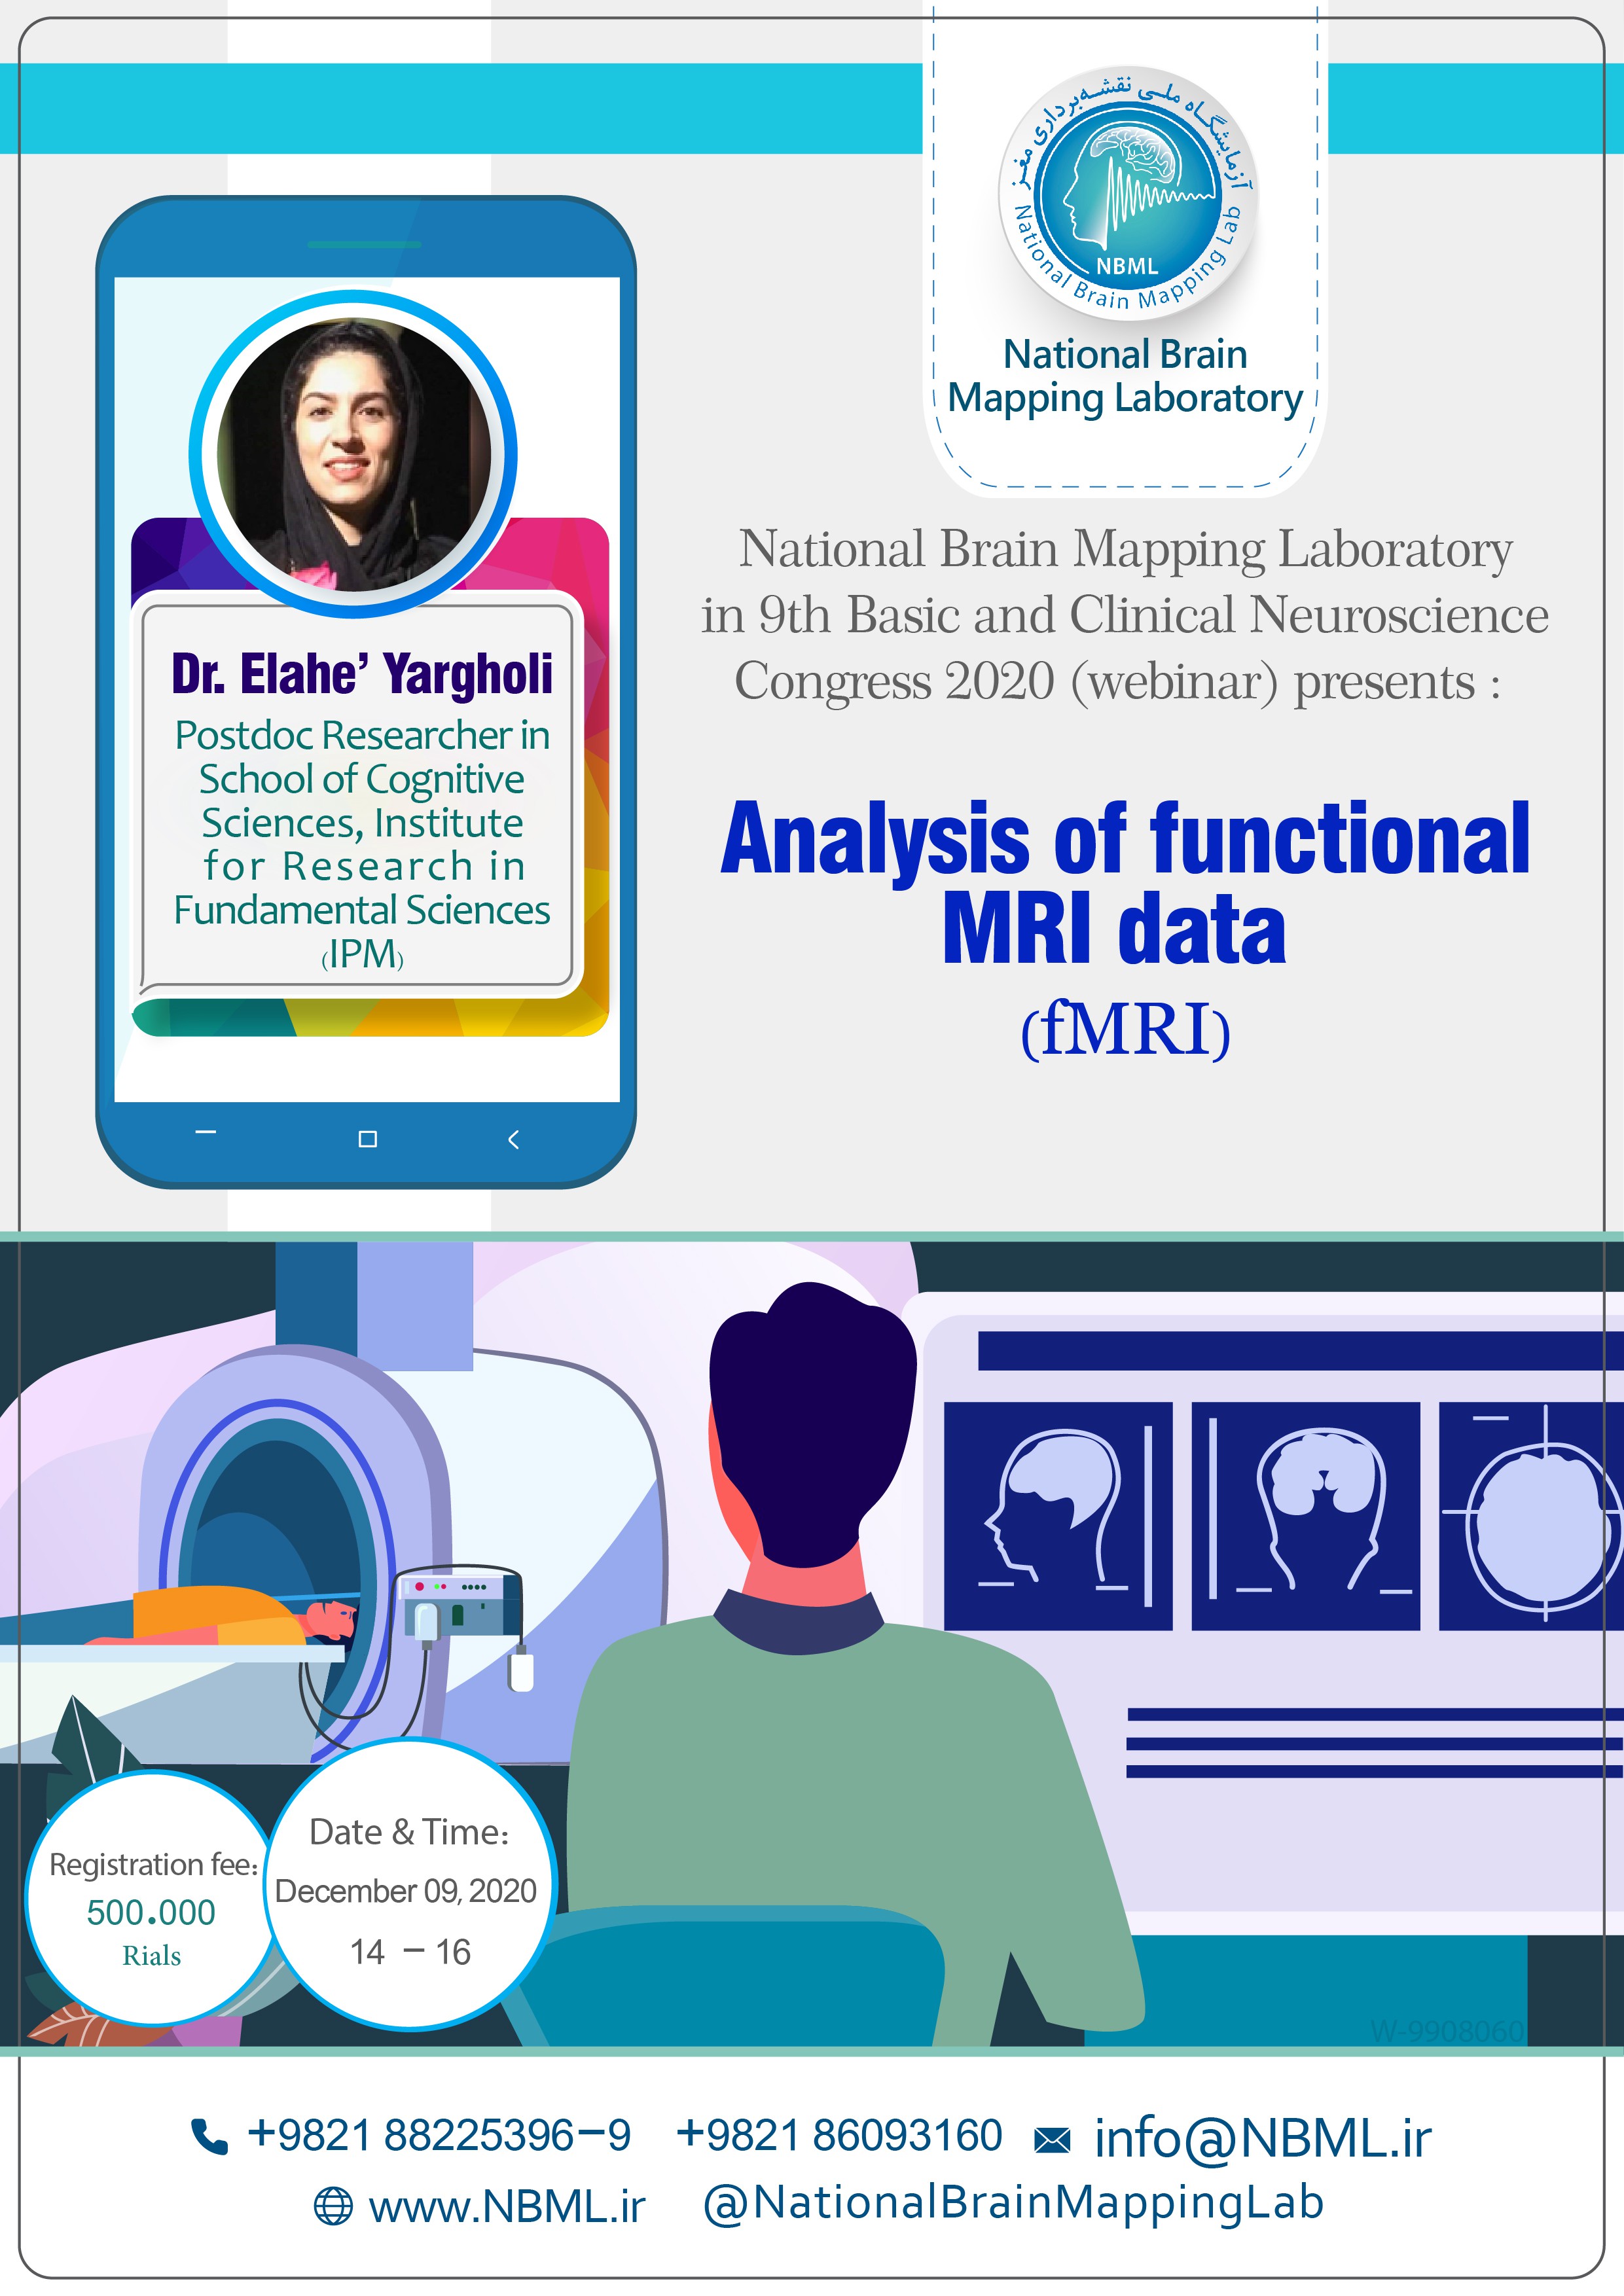 Analysis of functional MRI data